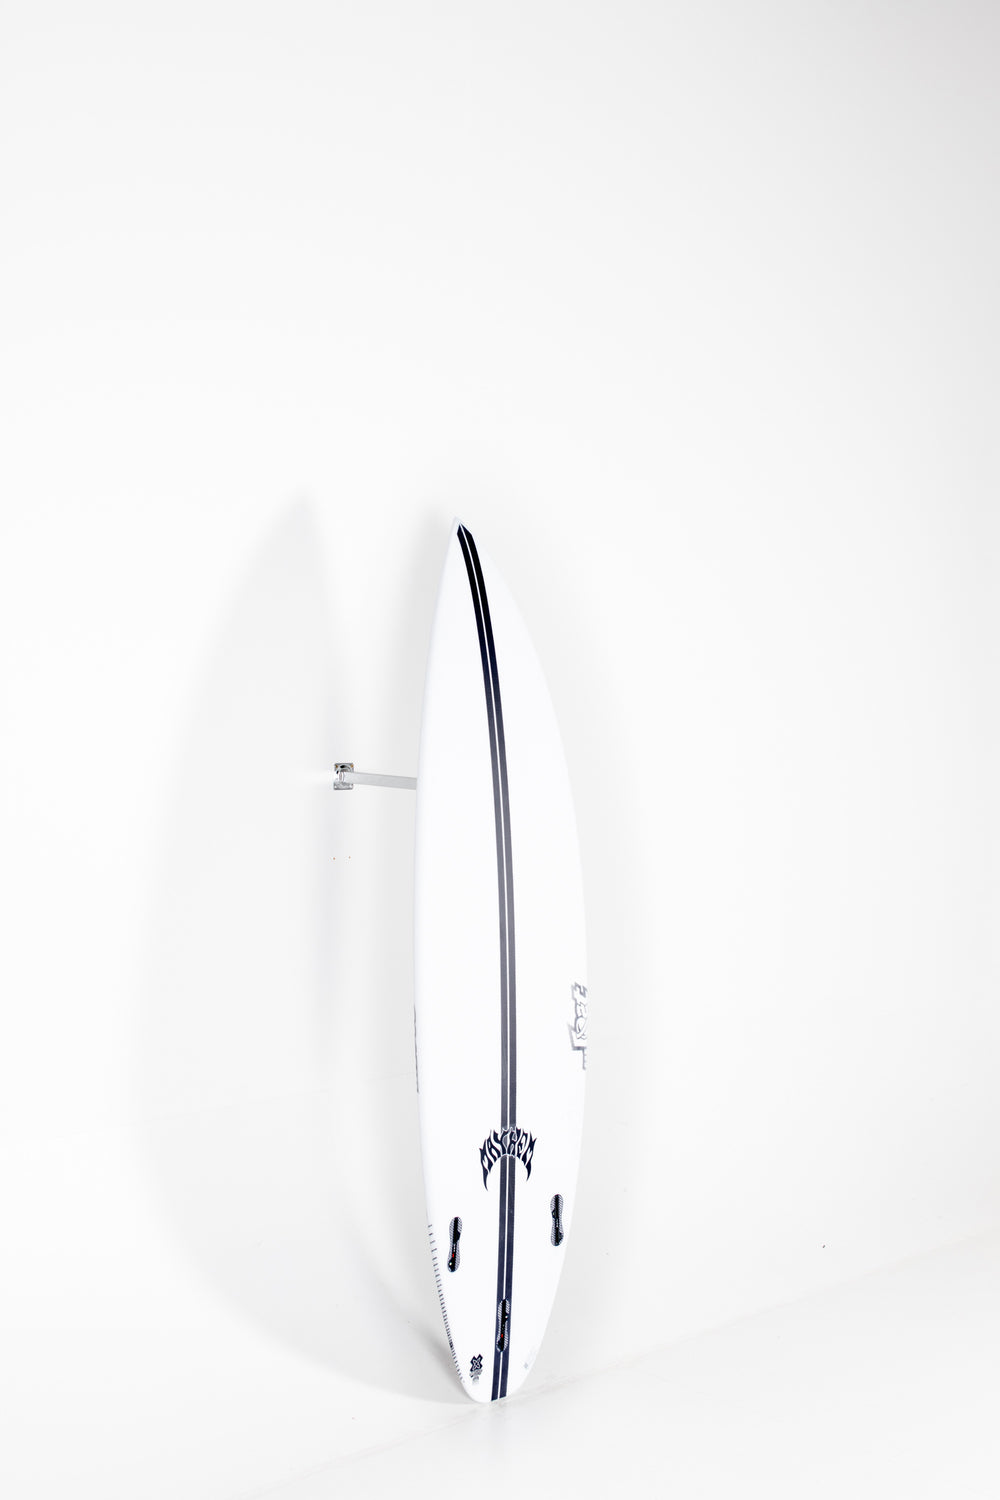 Lost Surfboard - DRIVER 2.0 by Matt Biolos - Light Speed - 6'0” x ...